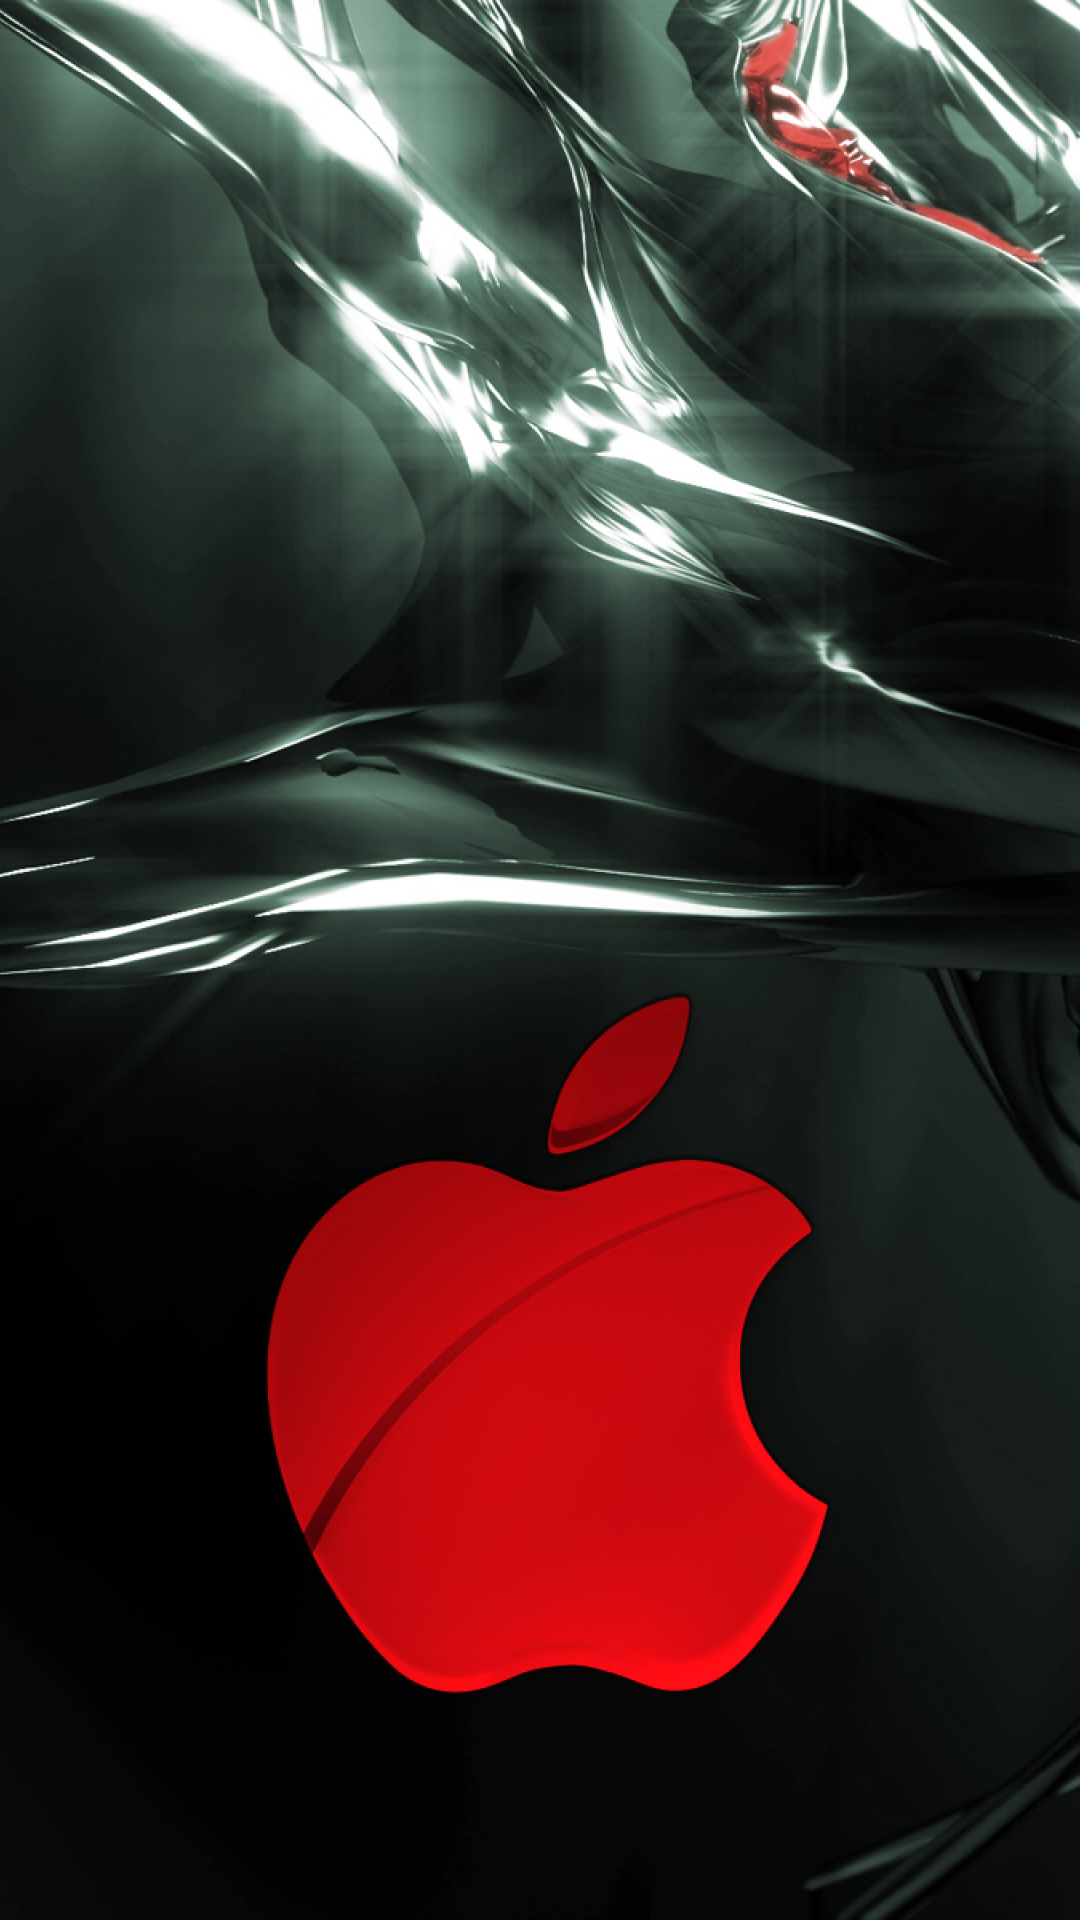 Apple Emblem - Fondos de pantalla gratis para iPhone 7 Plus